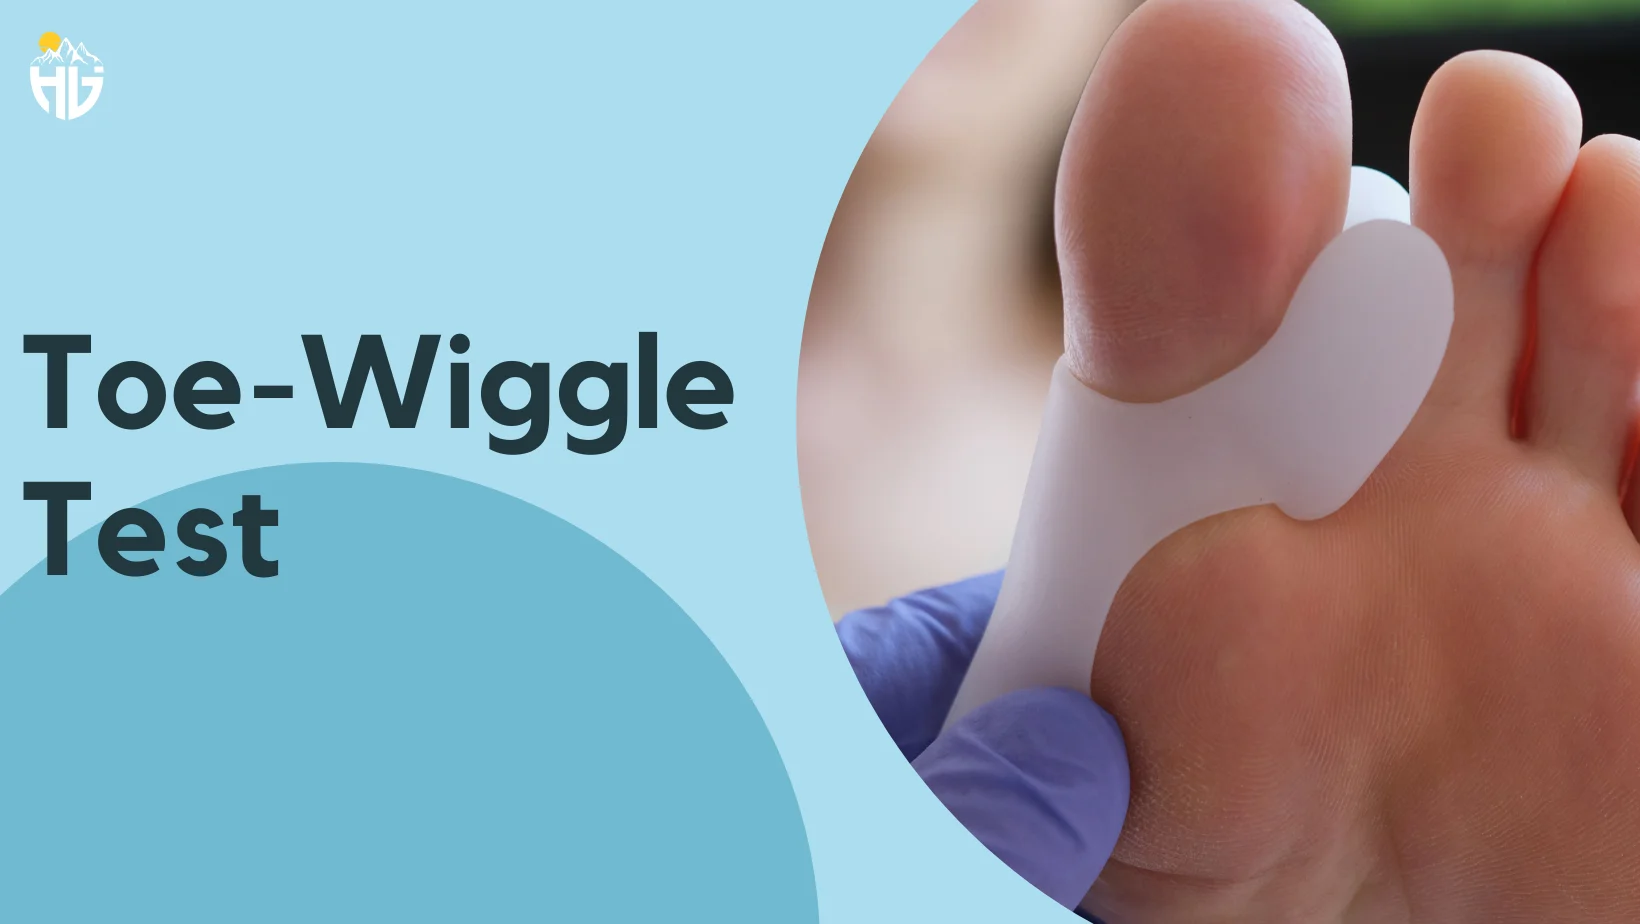 The Toe-Wiggle Test Myth